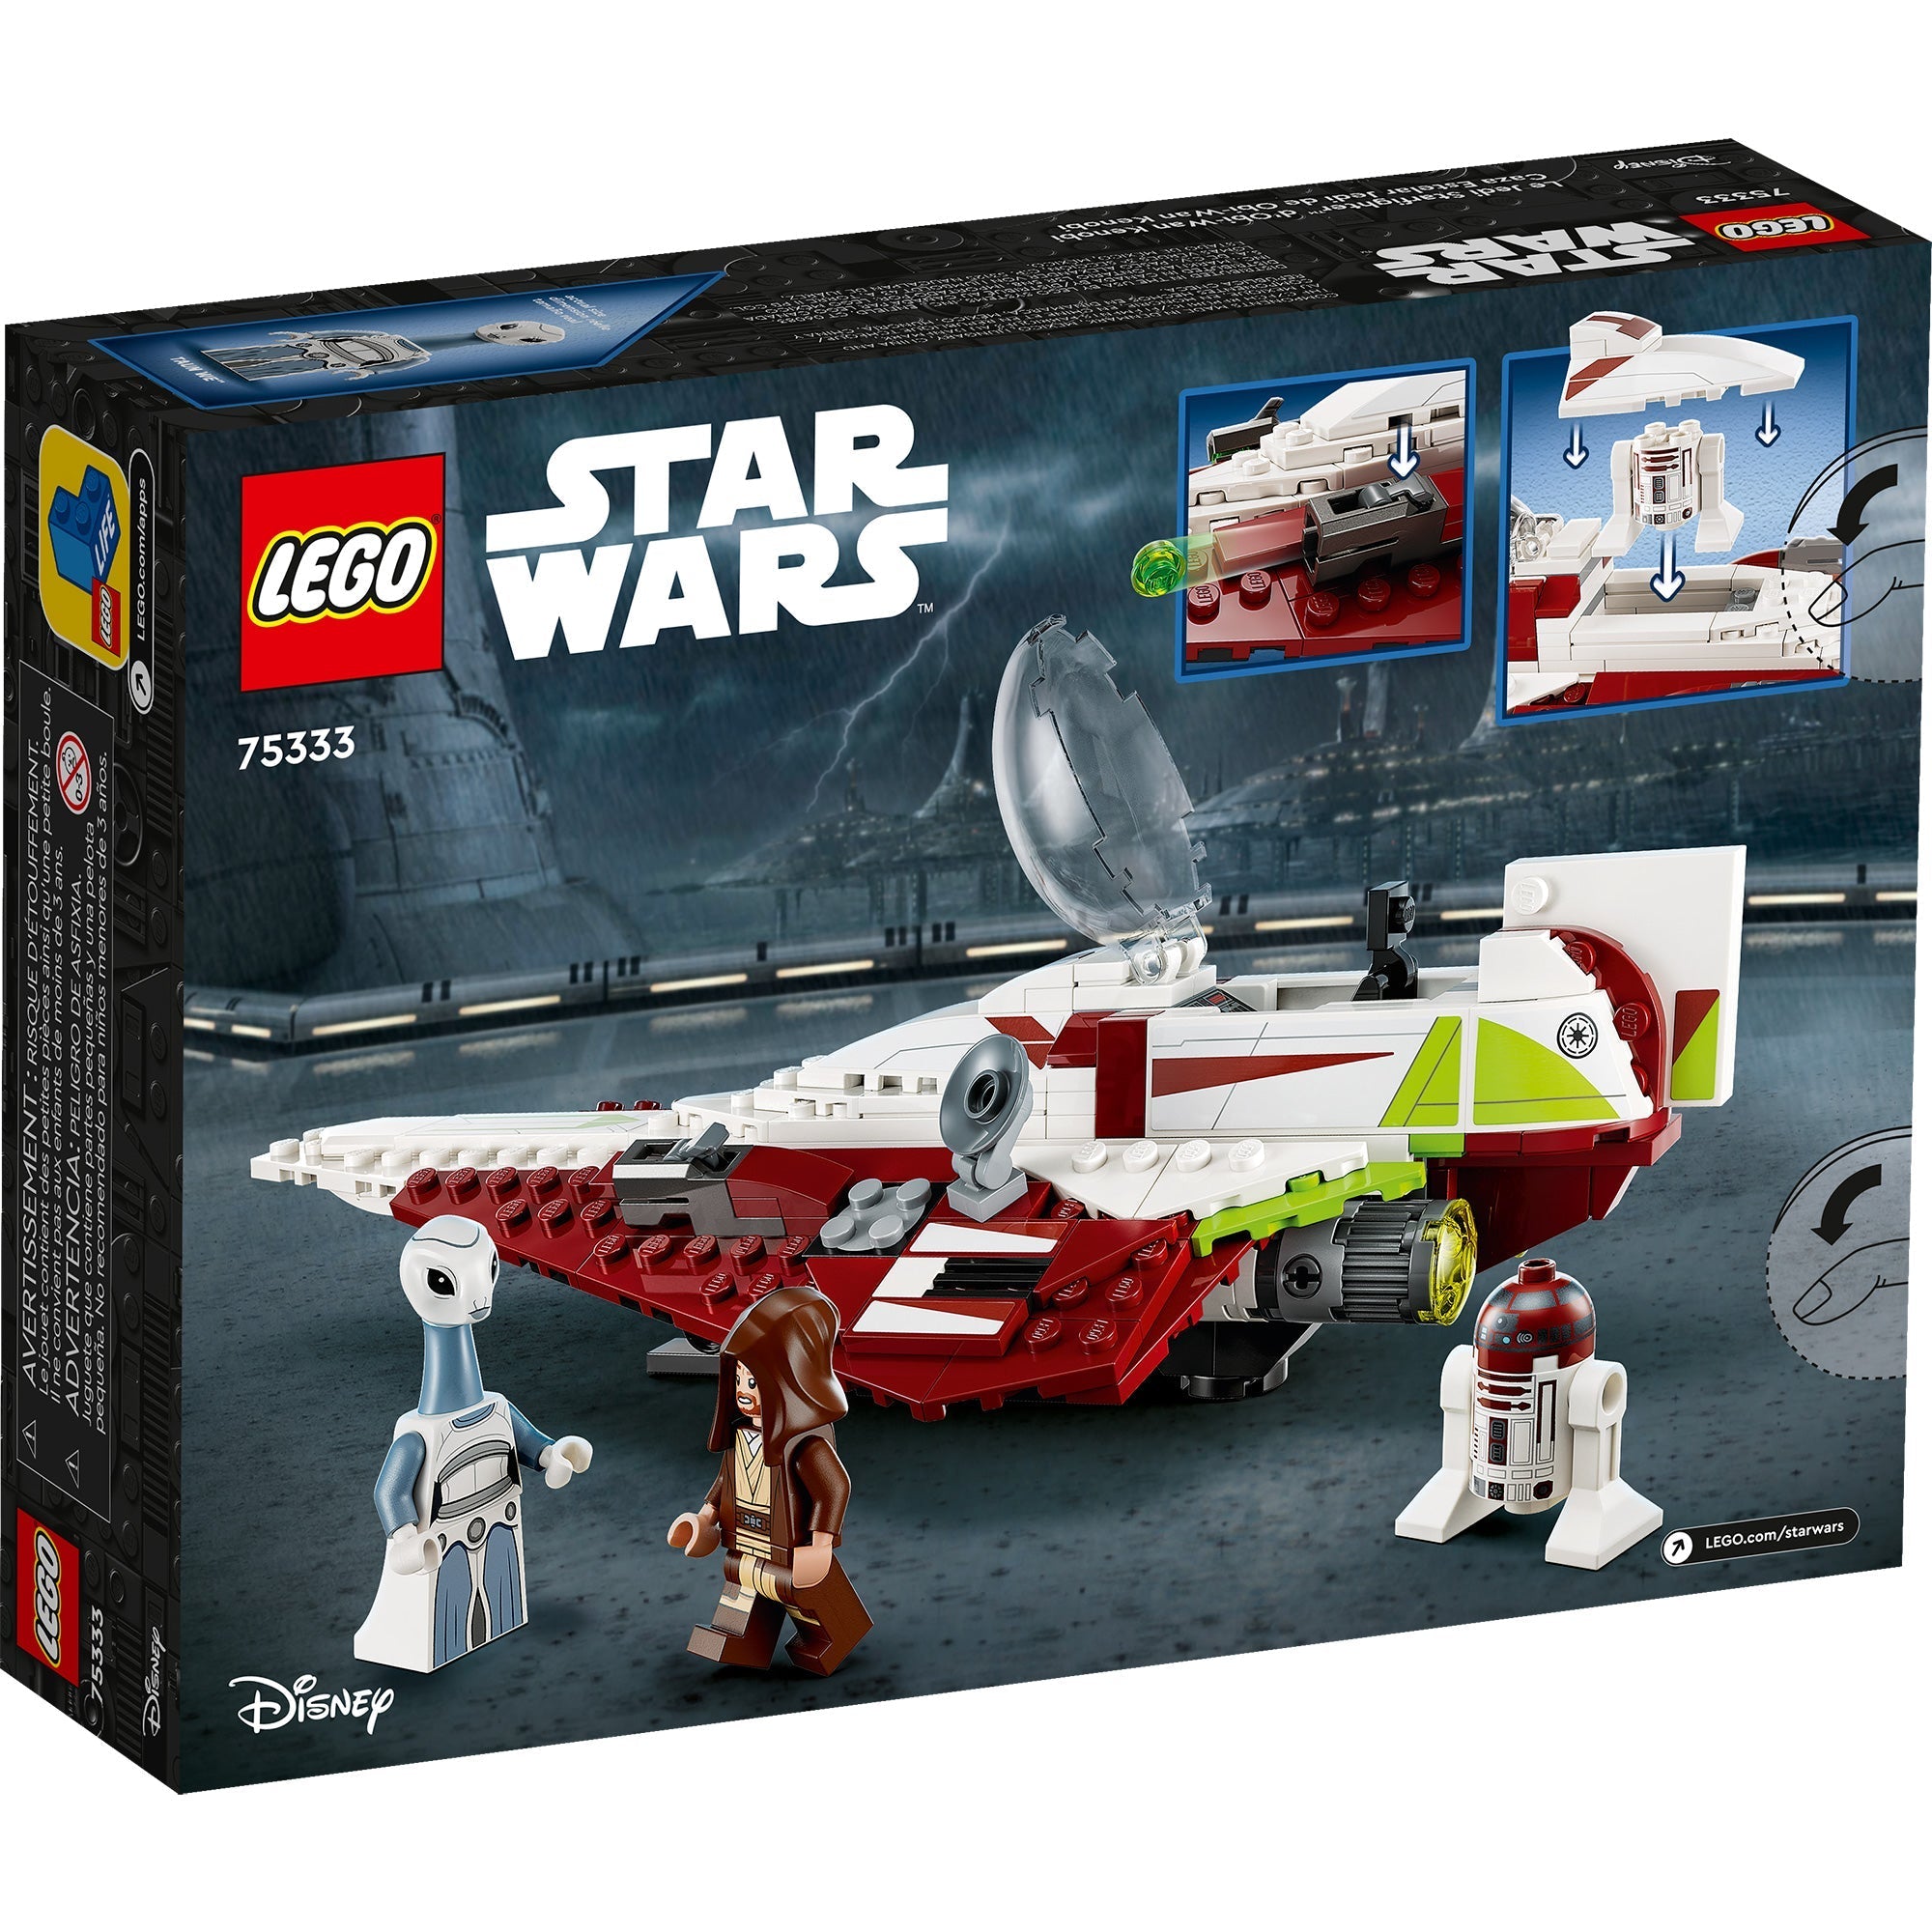 LEGO Star Wars Obi-Wan Kenobi’s Jedi Starfighter, 75333, Ages 7+, 282 Pieces